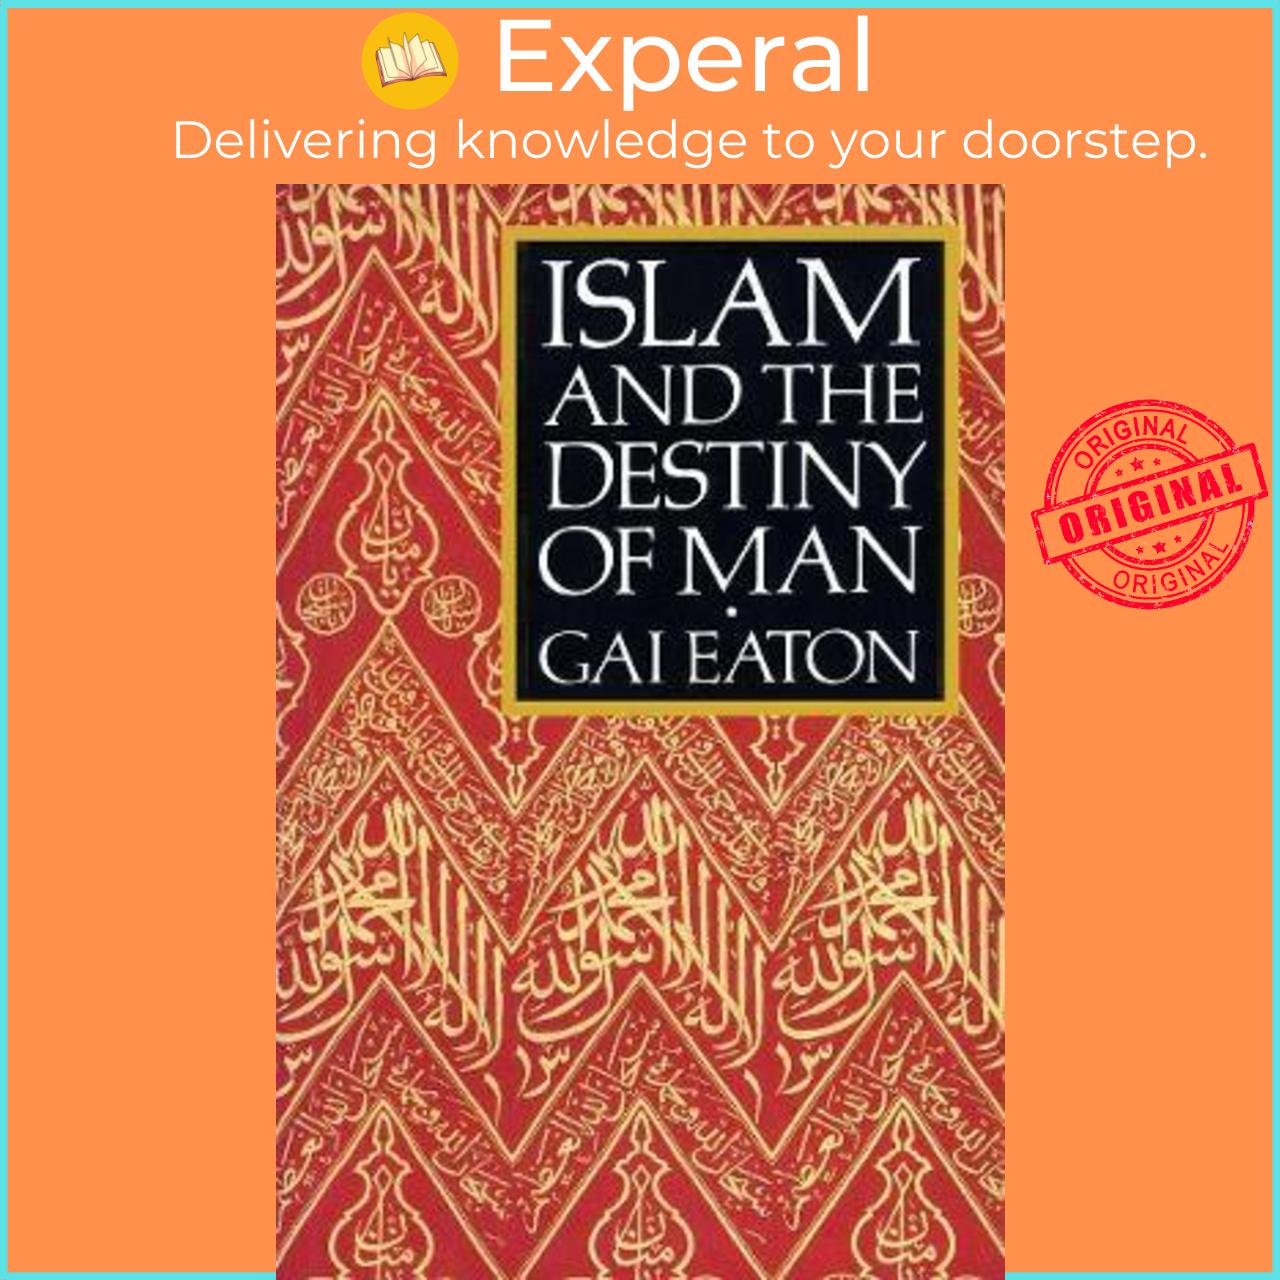 Hình ảnh Sách - Islam and the Destiny of Man by Gai Eaton (UK edition, paperback)